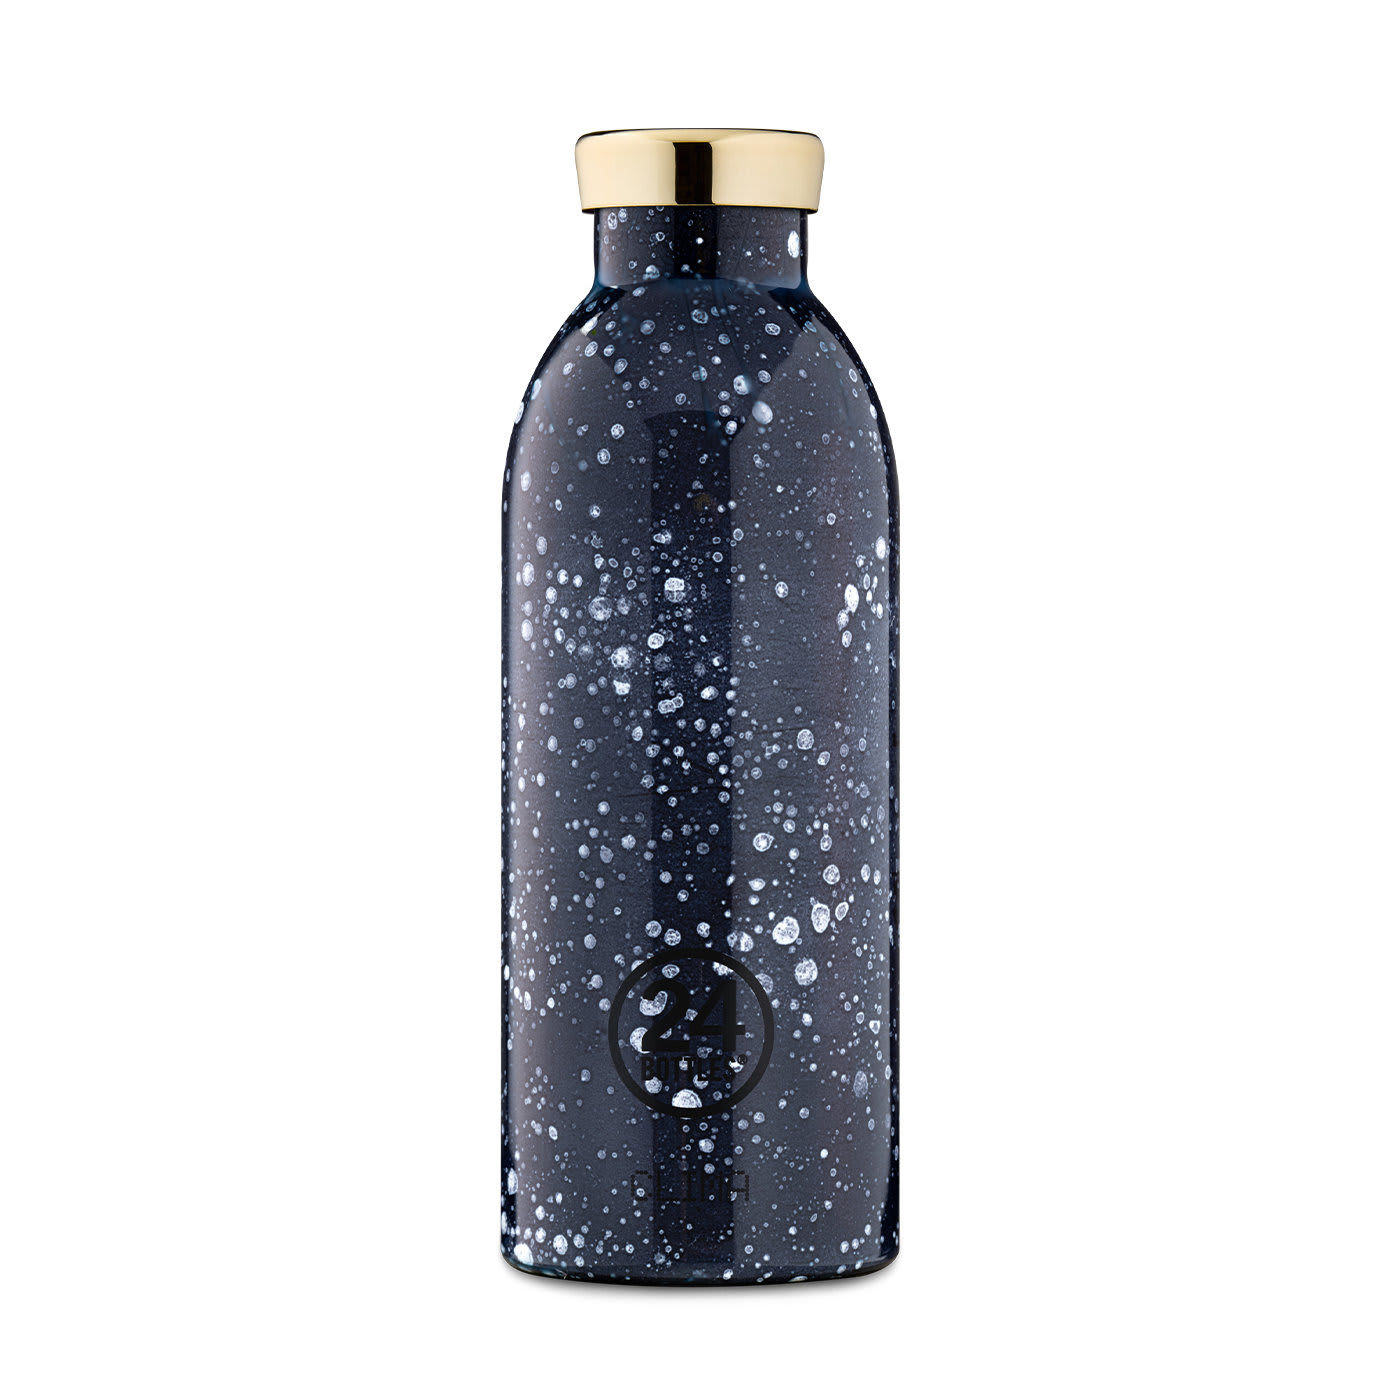 Black Leather Bottle Bag with Poseidon Bottle - Officina Del Poggio